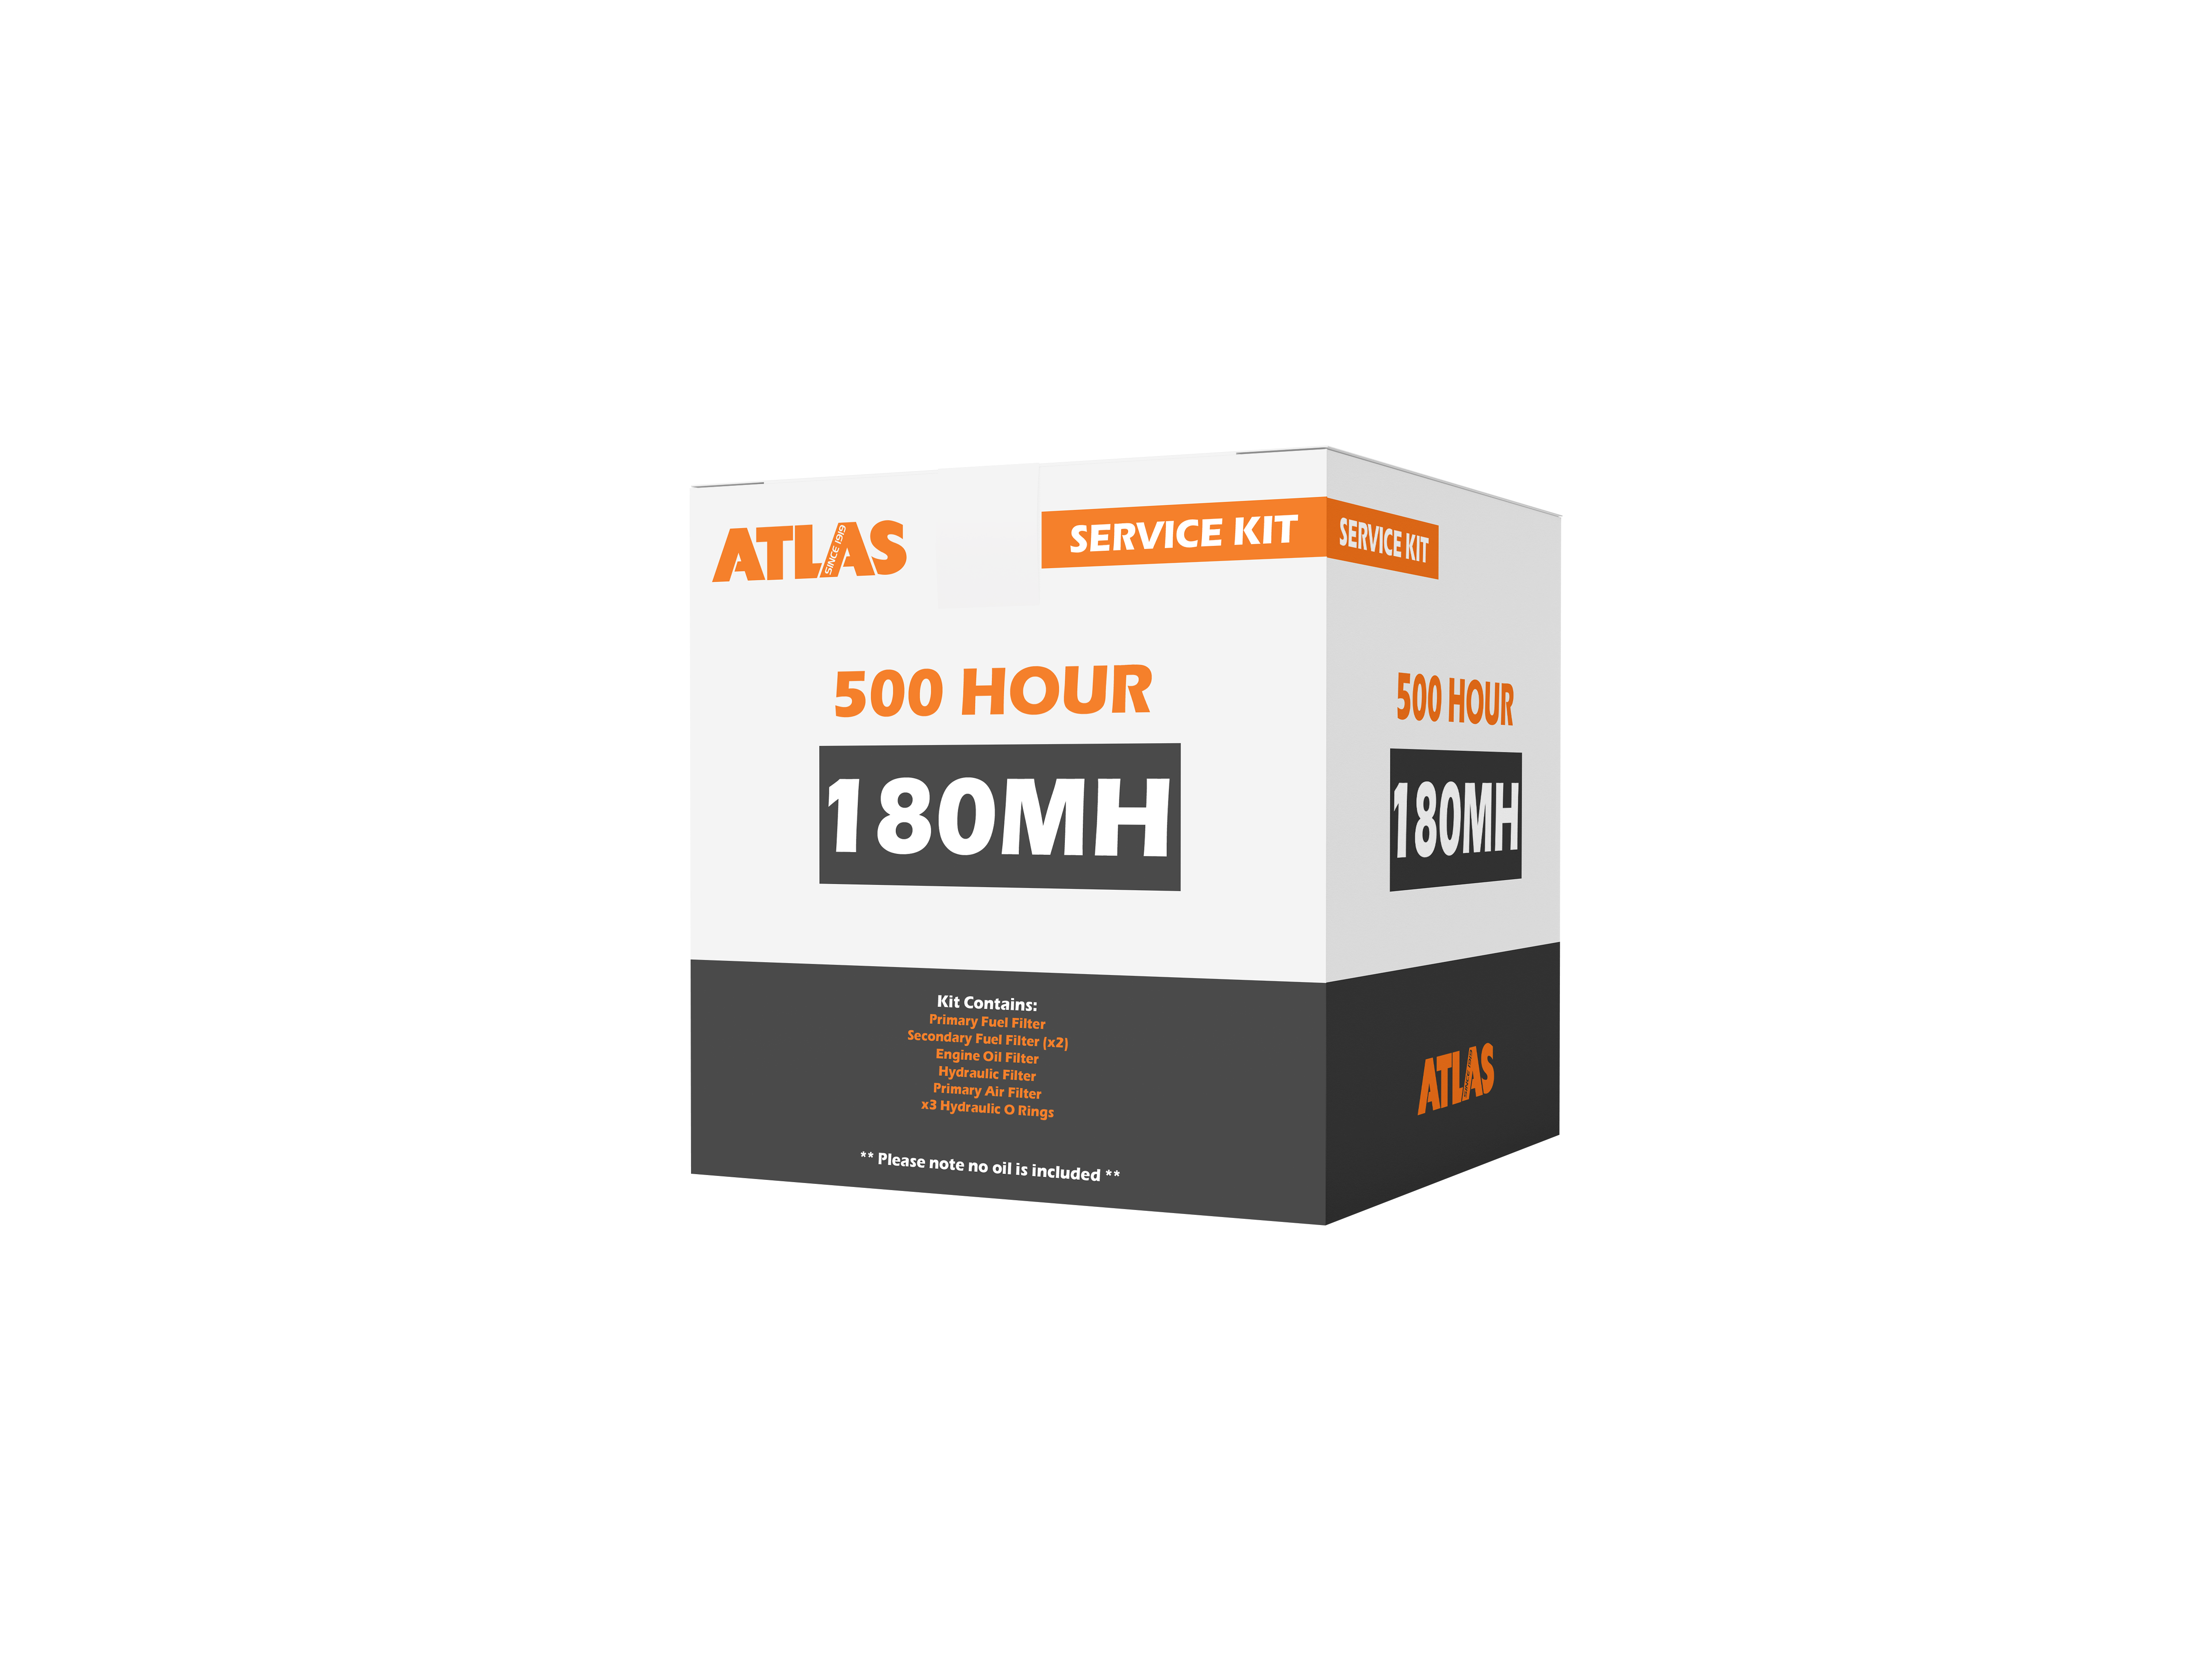 Atlas 180MH 500 Hour Service Kit